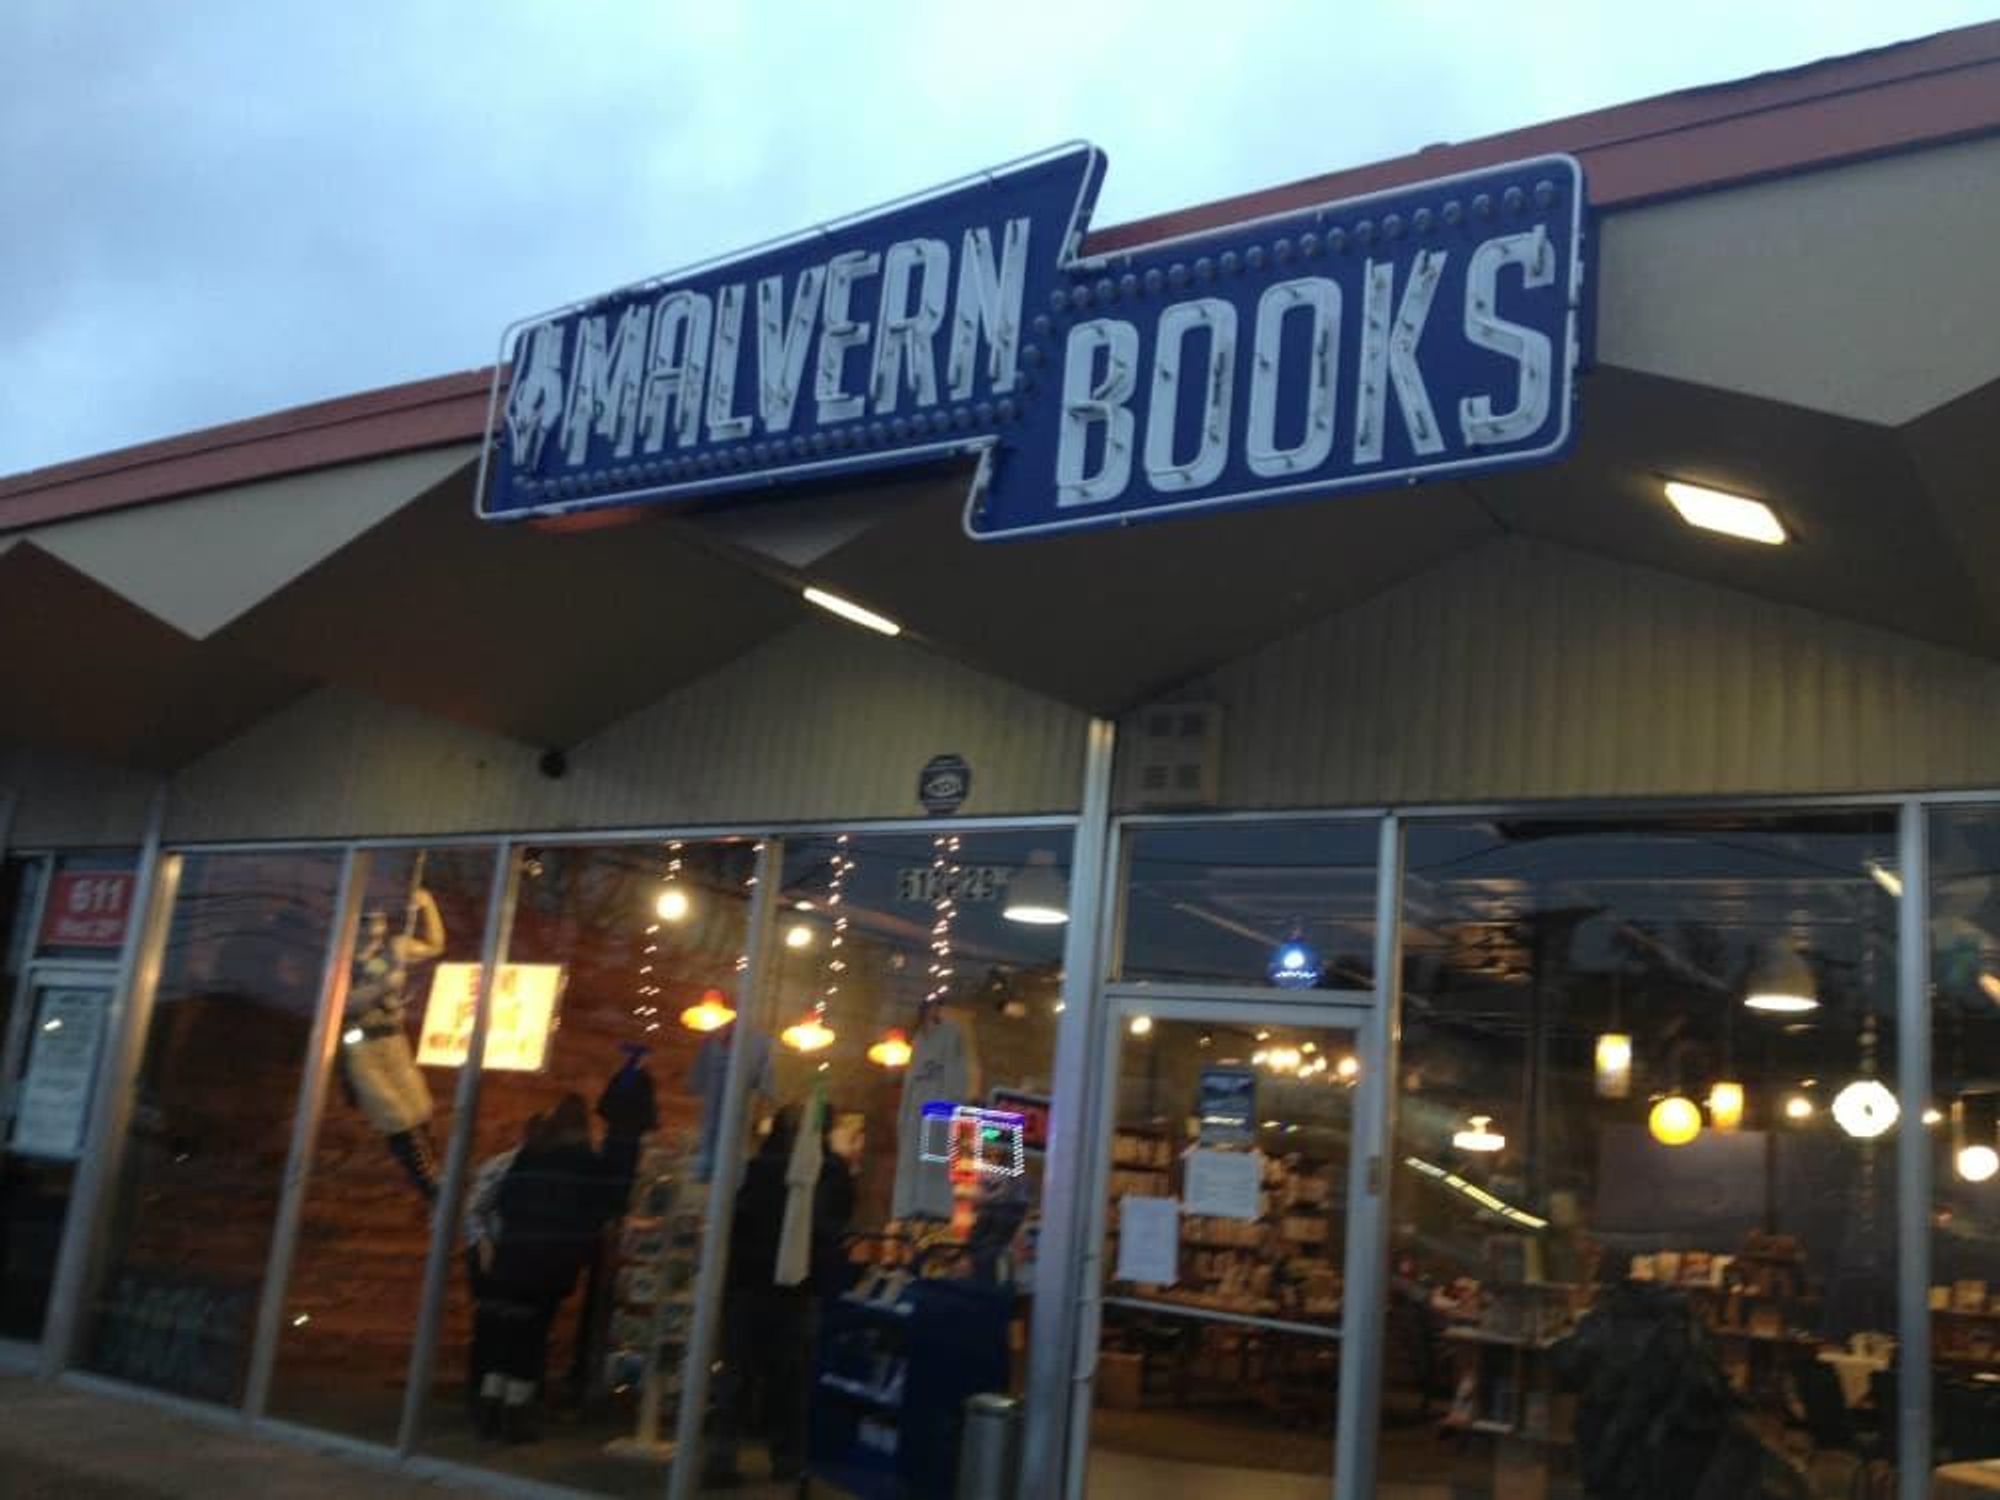 Malvern Books sign